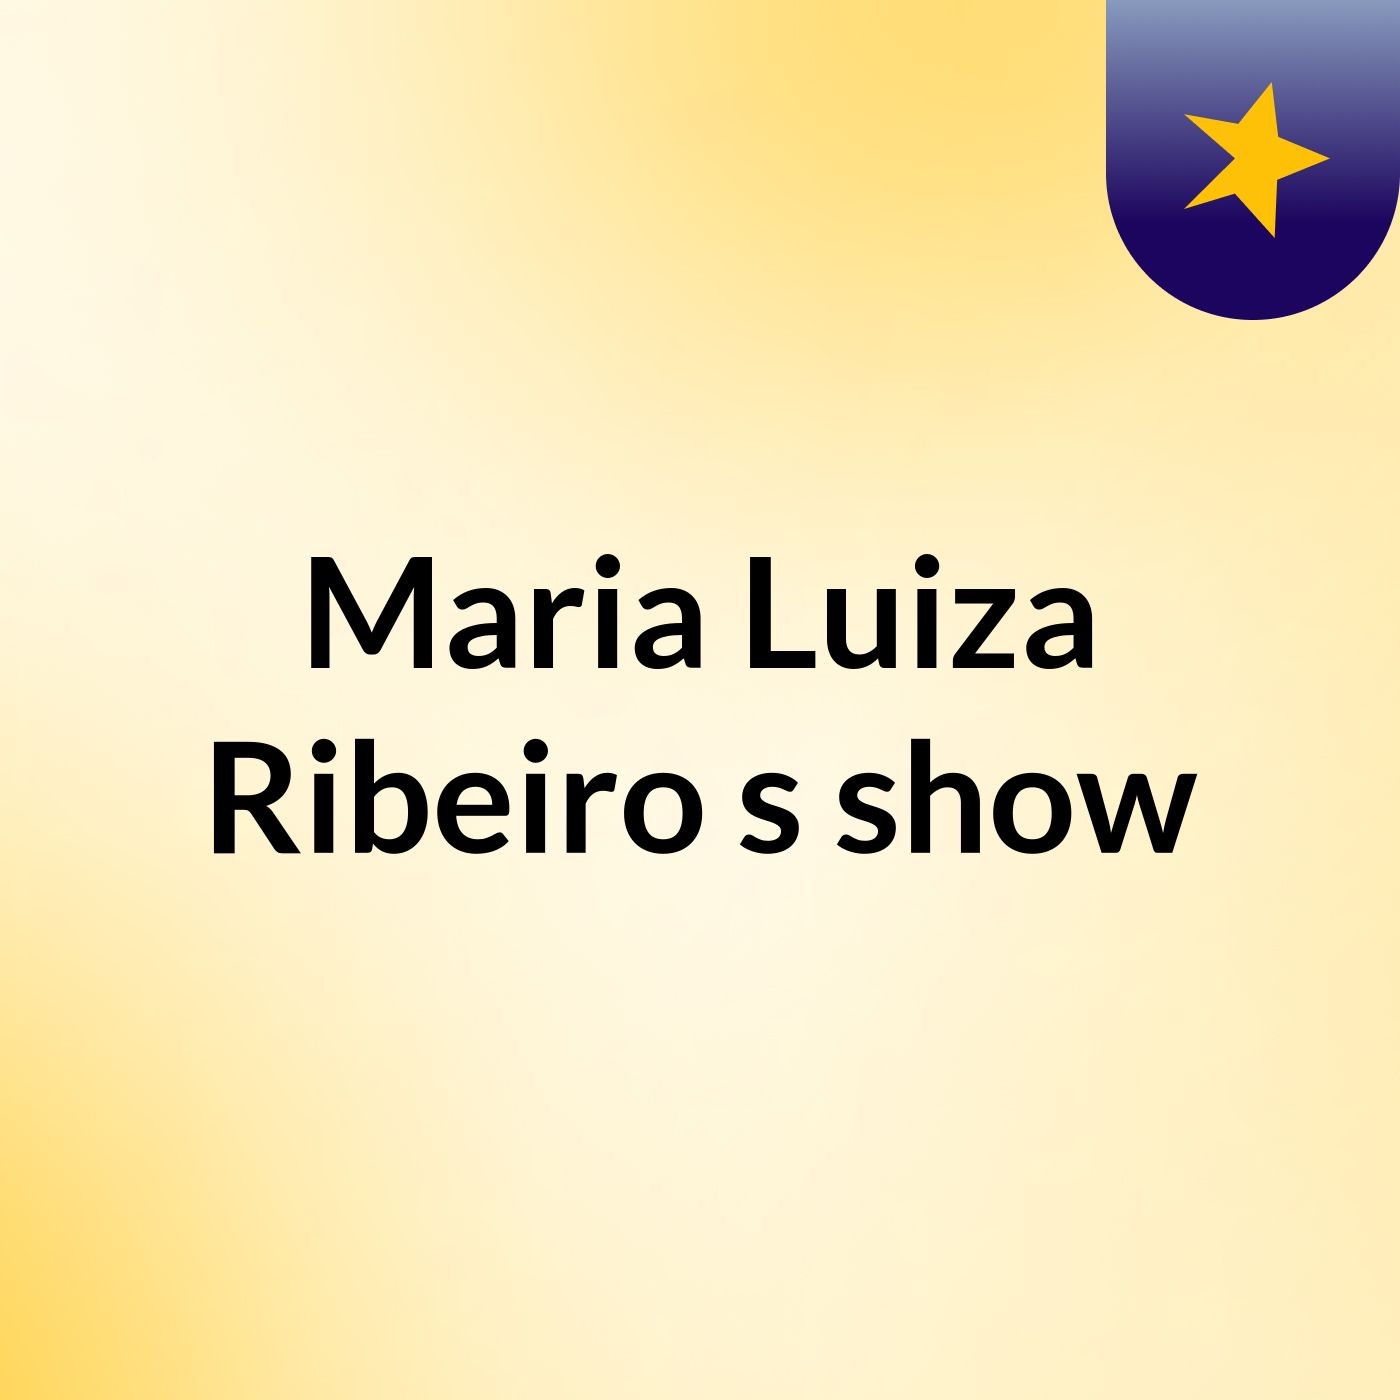 Maria Luiza Ribeiro's show